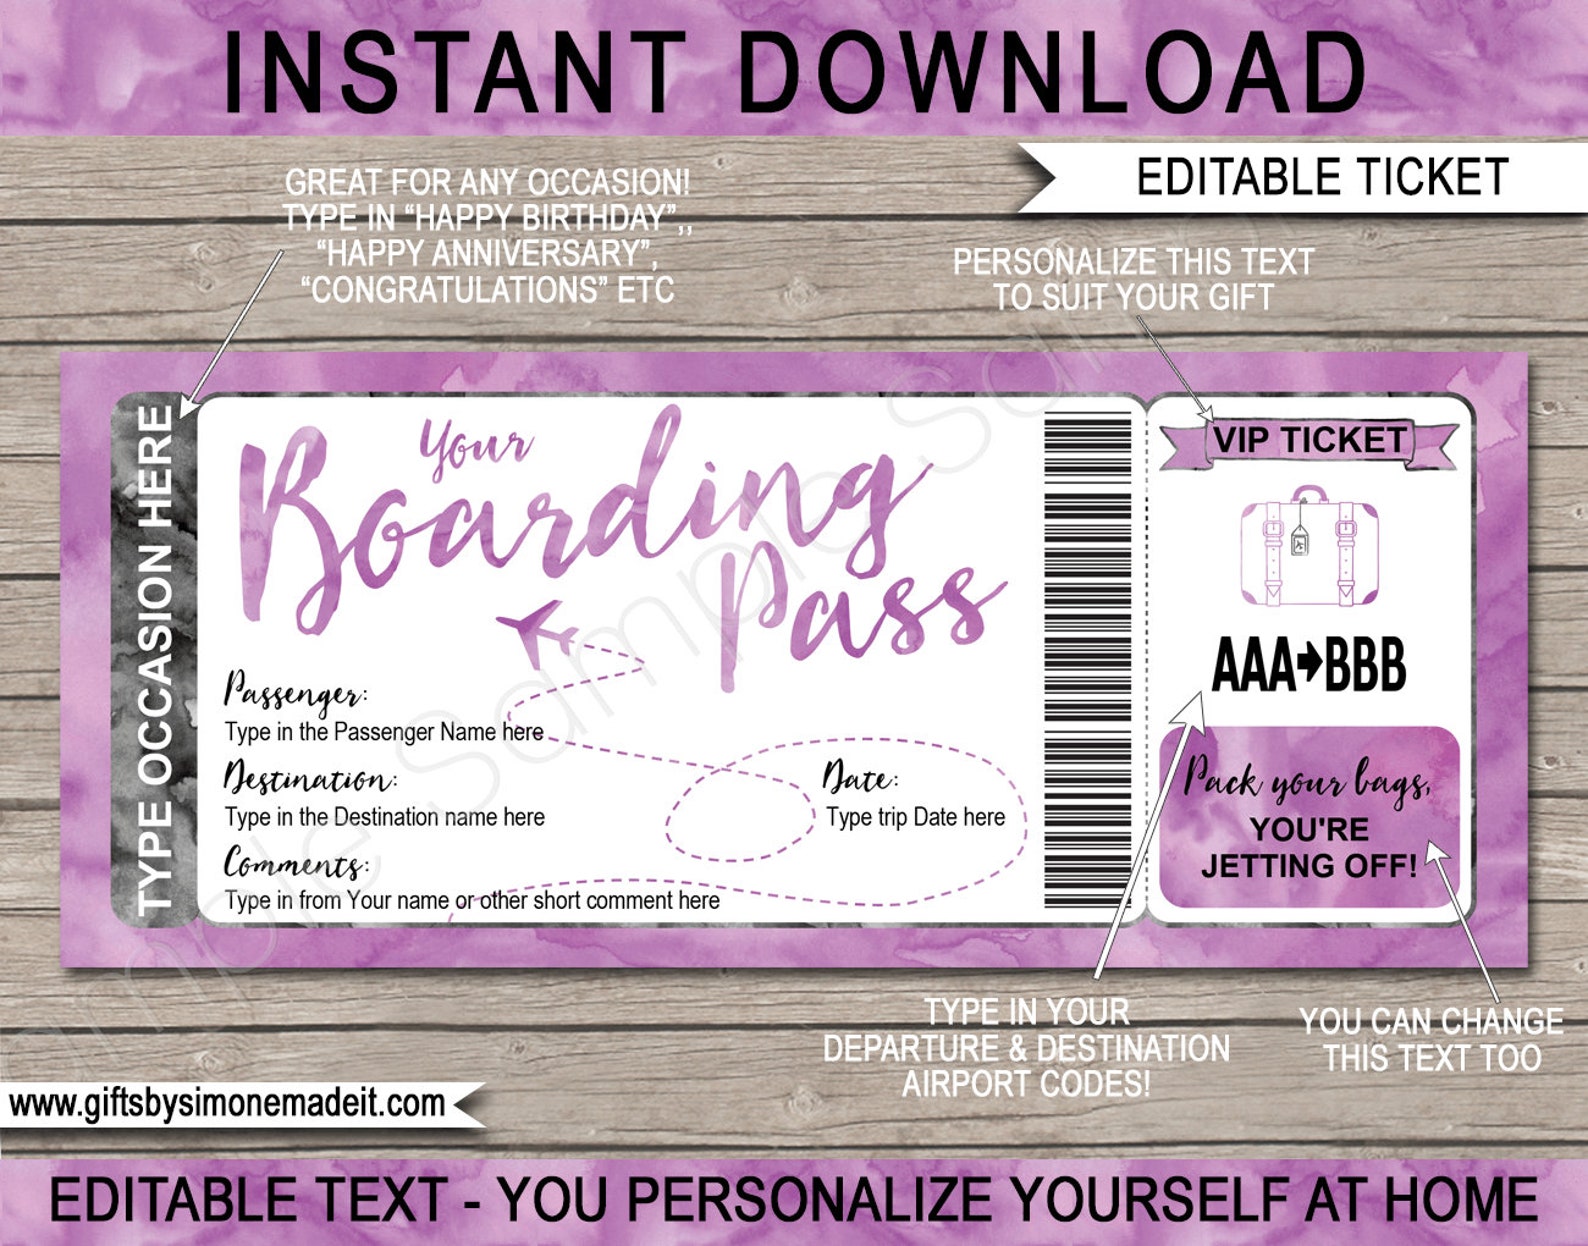 surprise trip boarding pass template